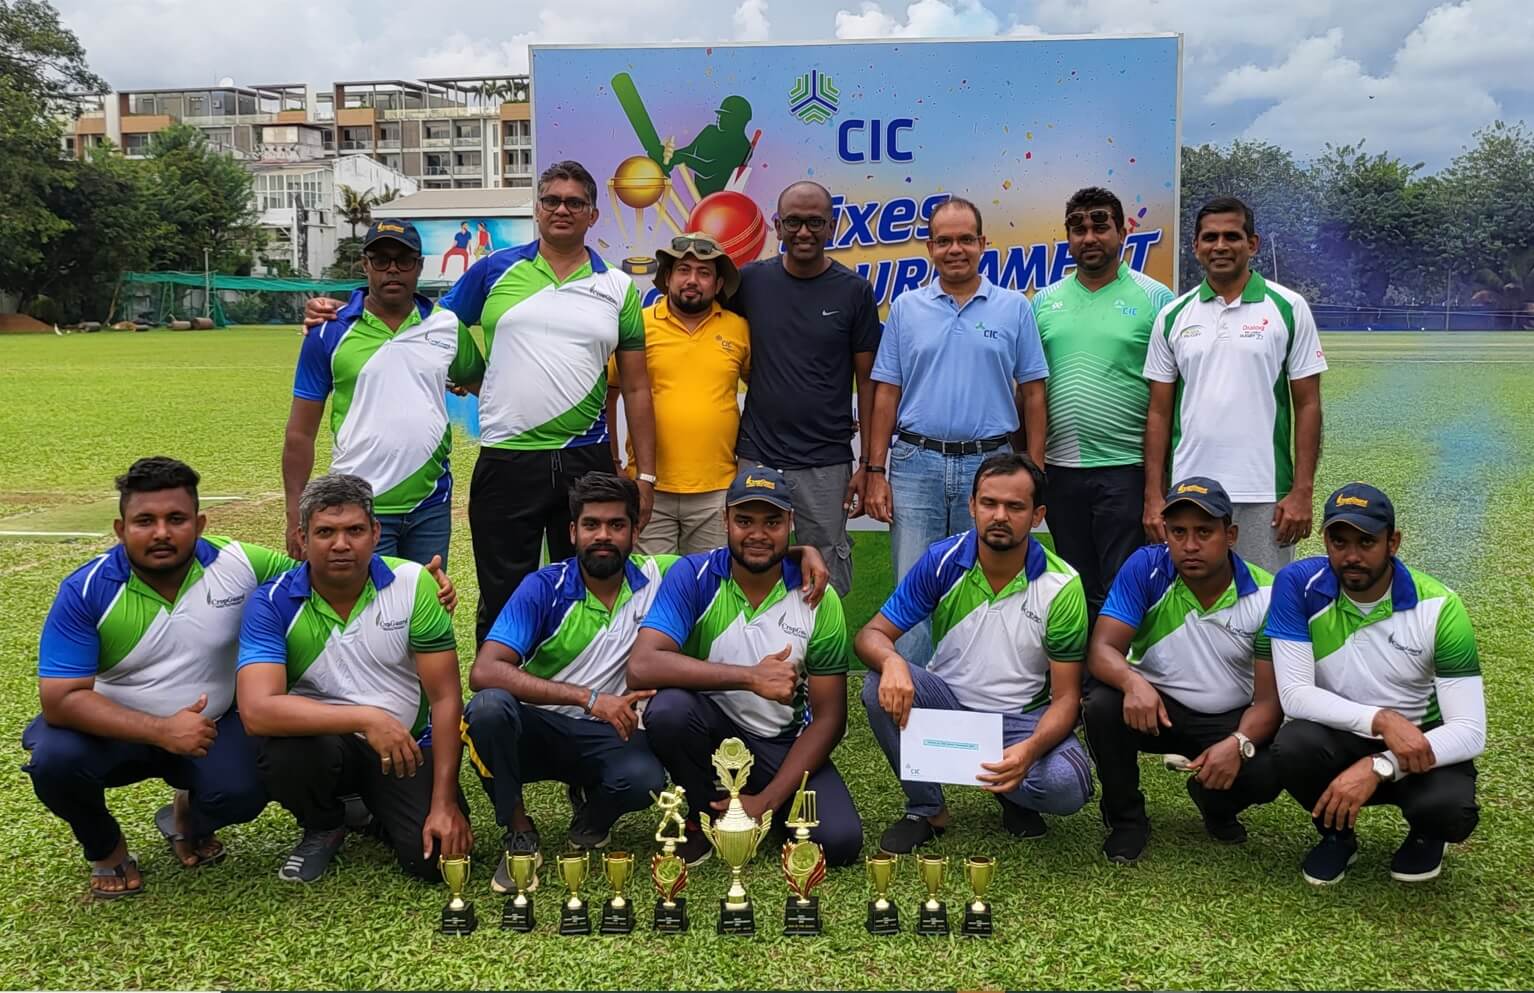 CIC Inter Company /Business unit six a side Cricket Tournament 2022